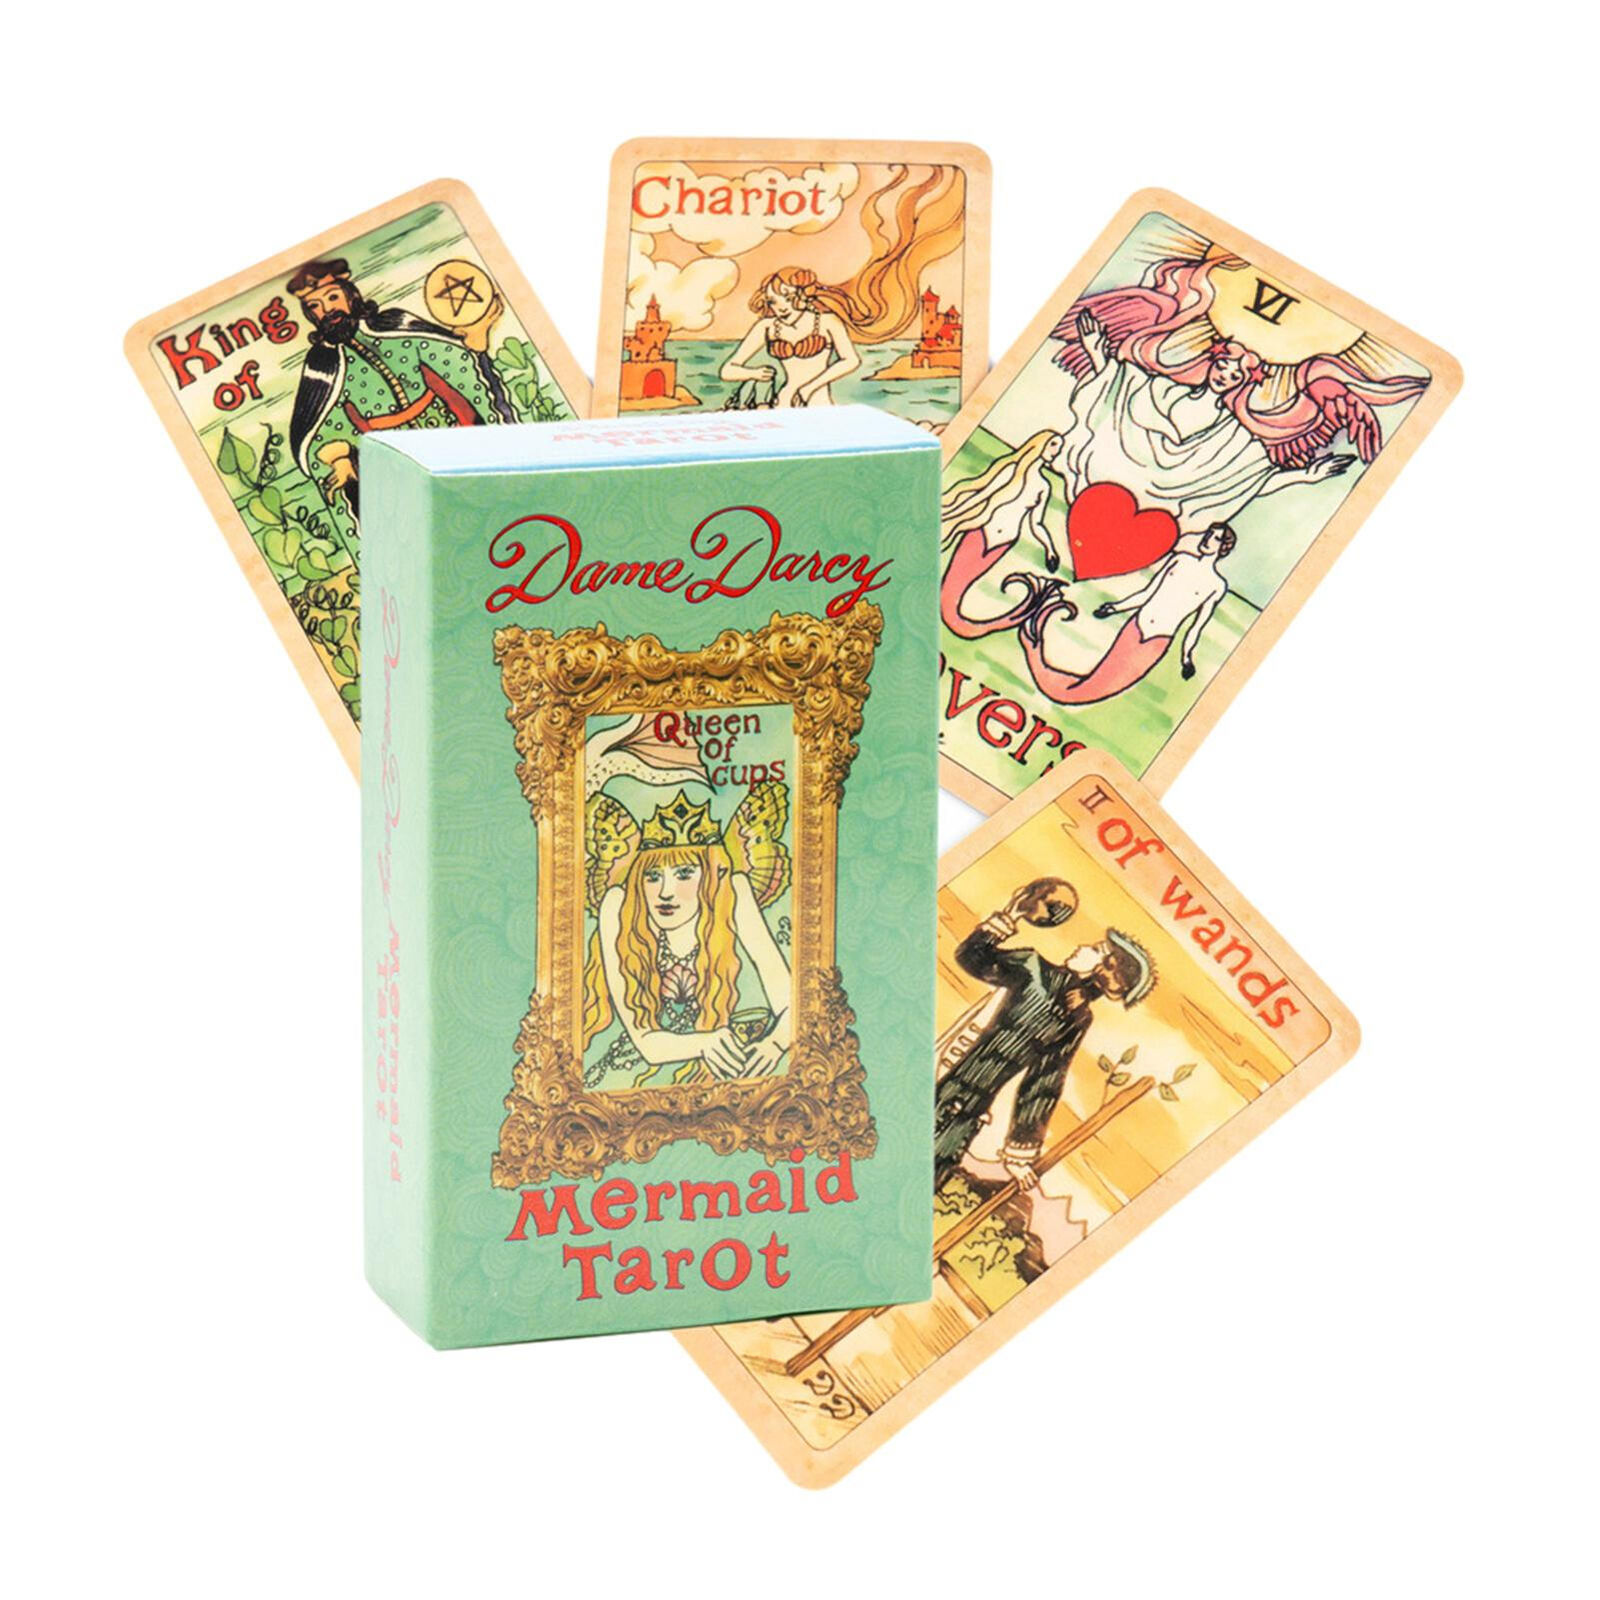 Mermaid Tarot 78 + 3 General Instruction Cards Brand New